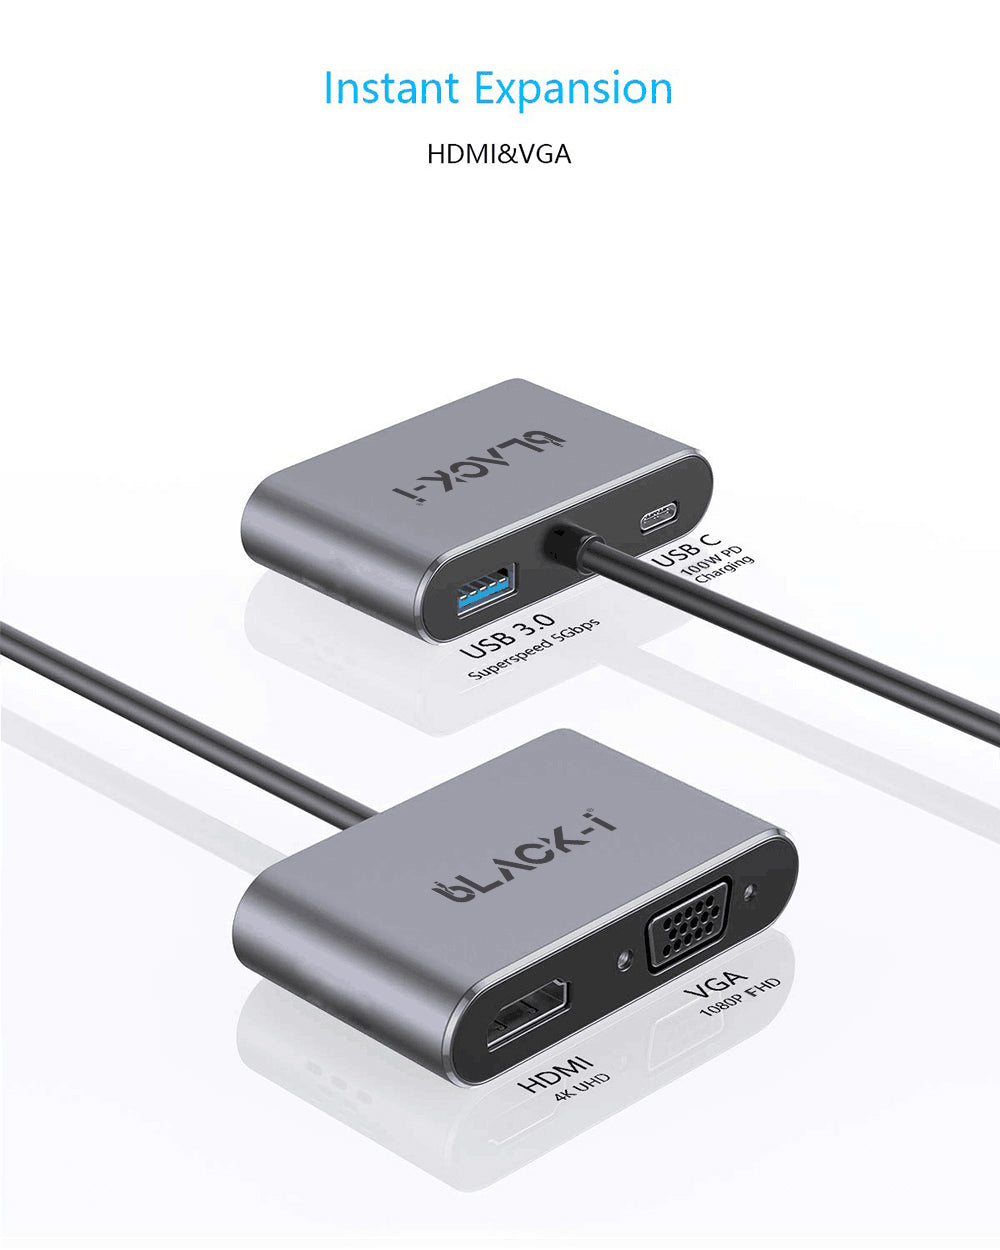 Black-i USB-C 4-in-1 Hub – HDMI, VGA, USB 3.0 & PD – Streamlined Connectivity for Efficient Data Transfer and Enhanced Productivity